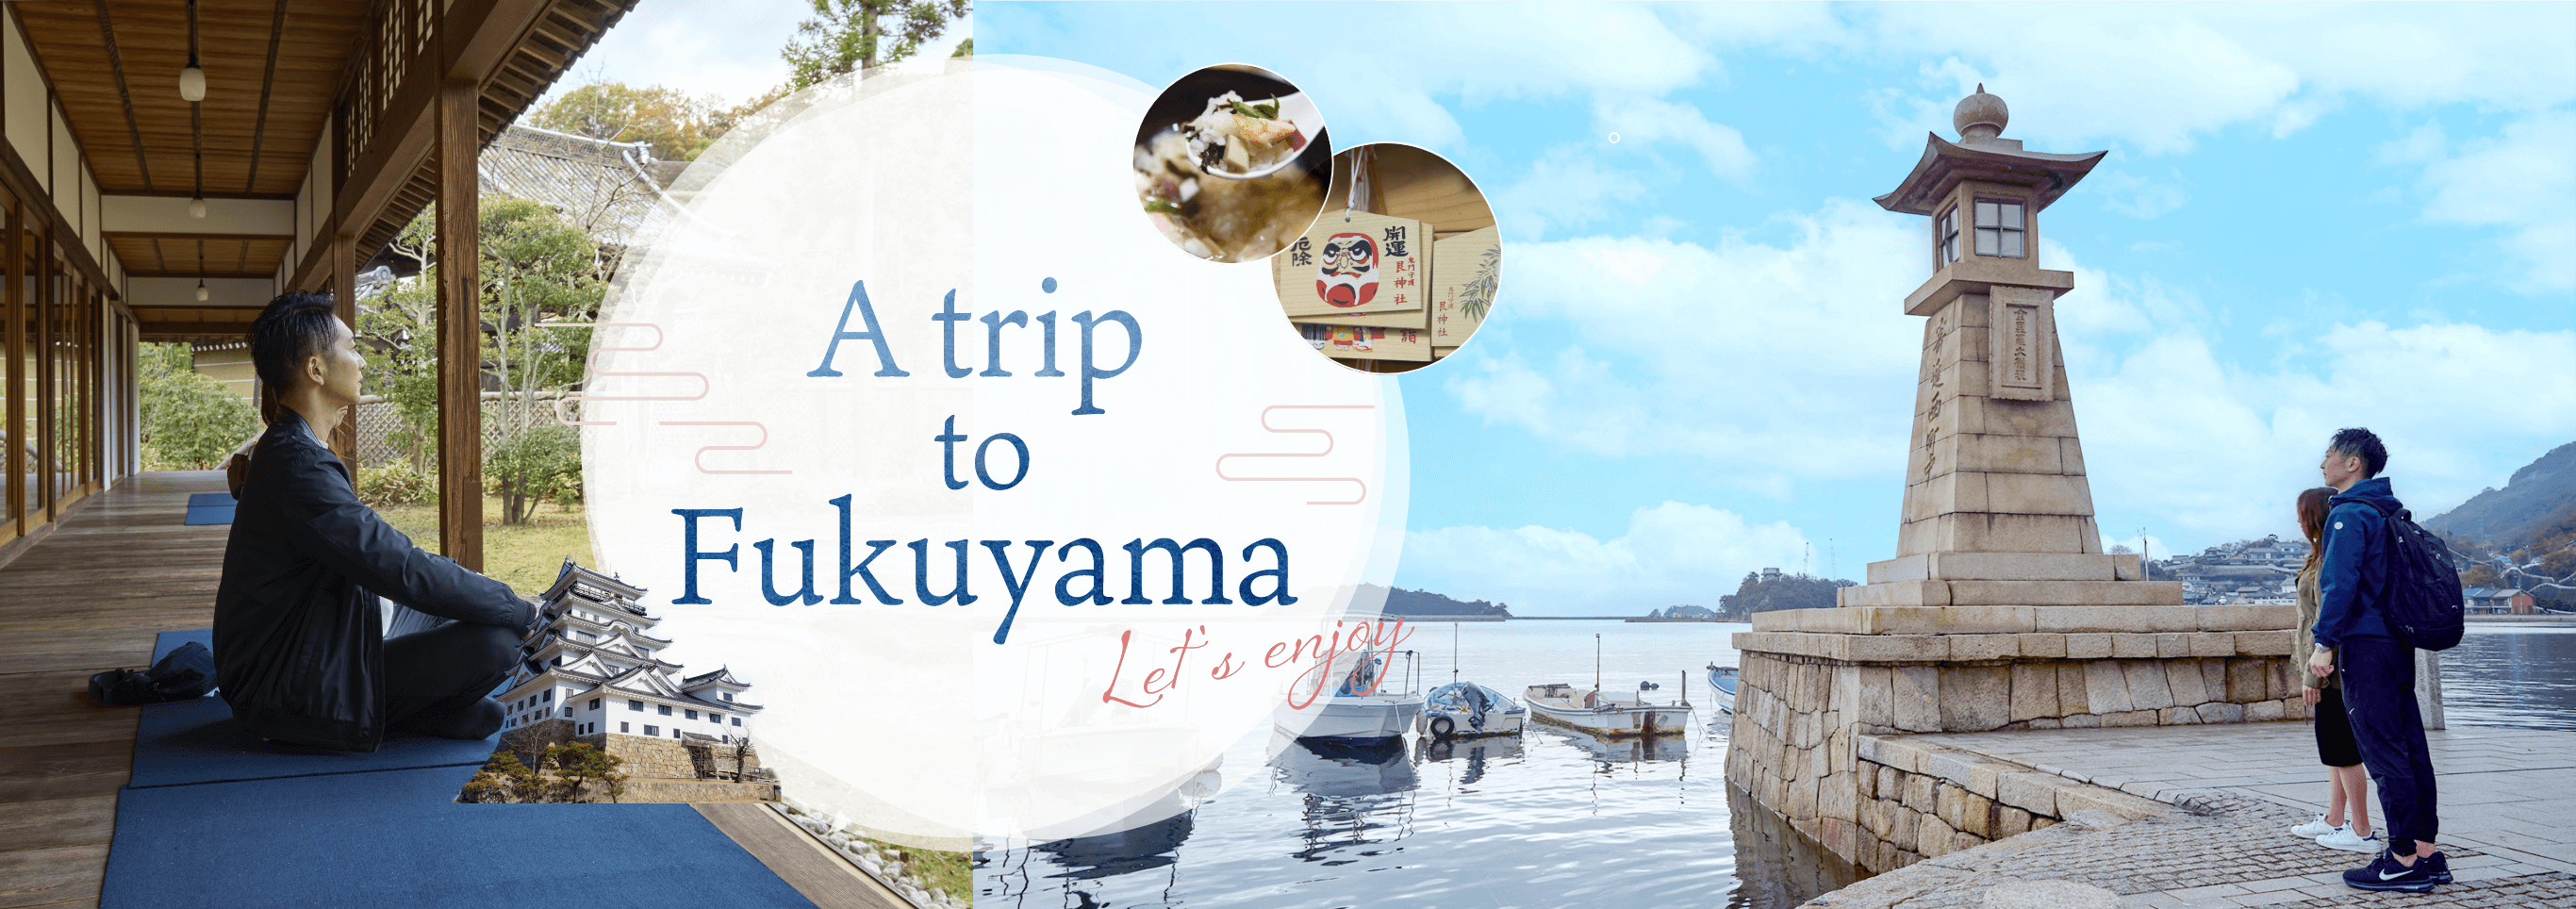 A trip to Fukuyama